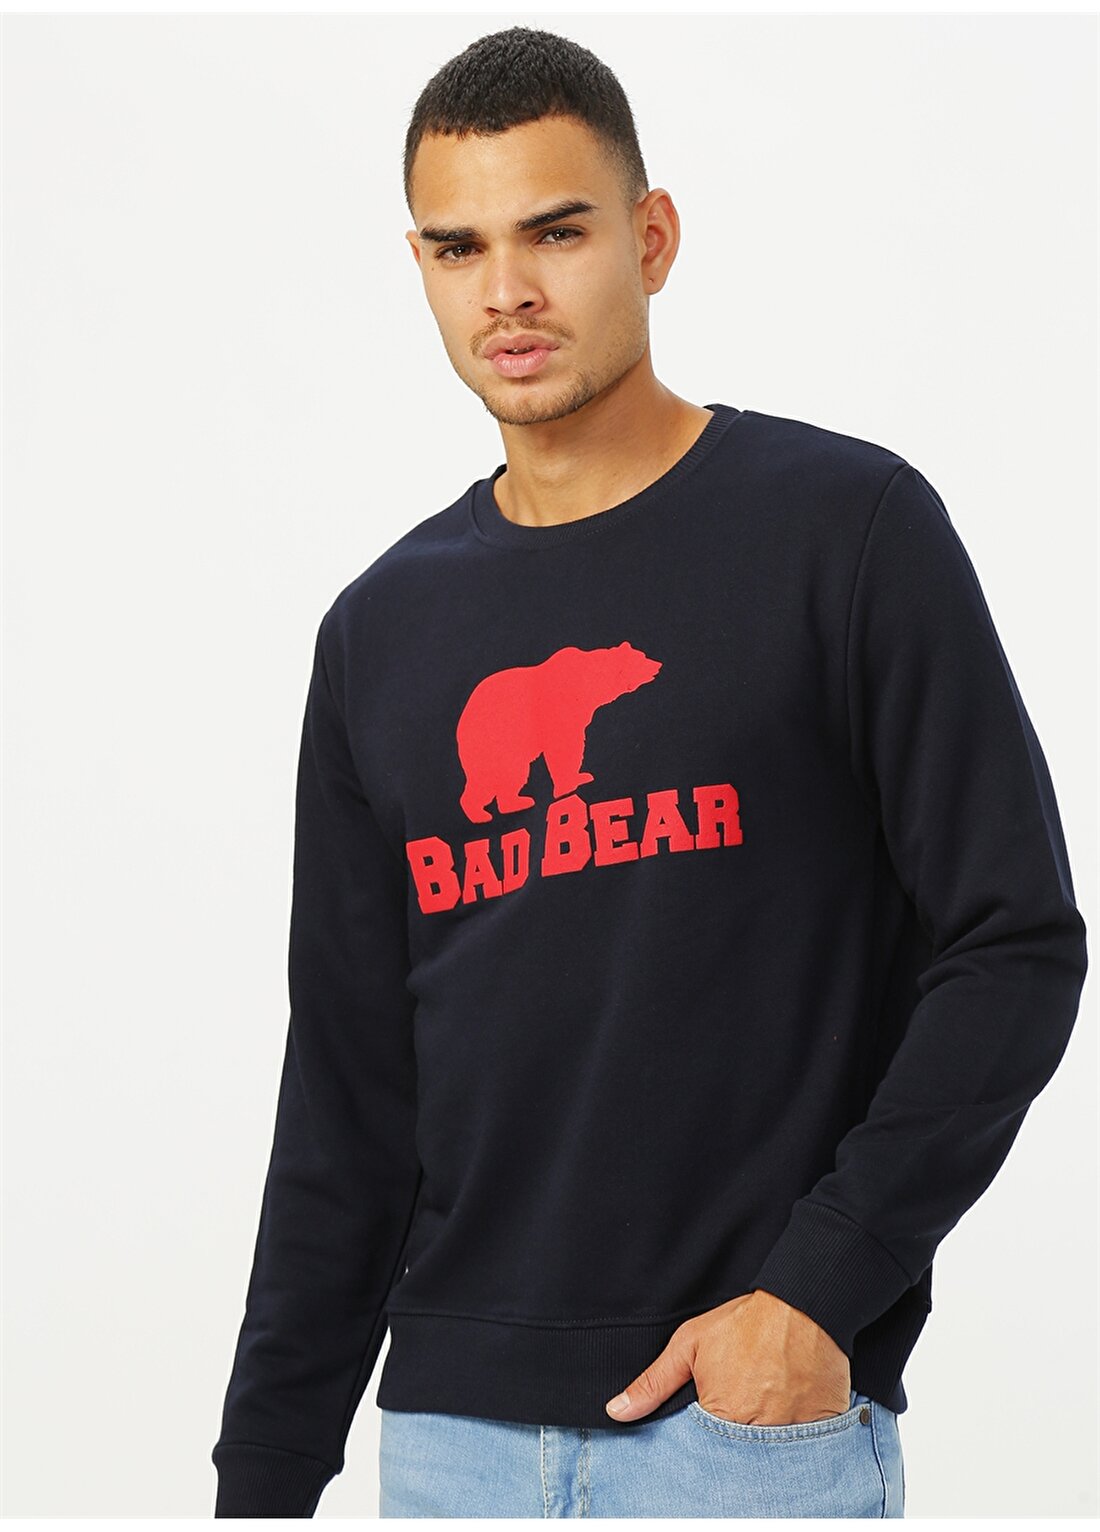 Bad Bear Lacivert Sweatshirt